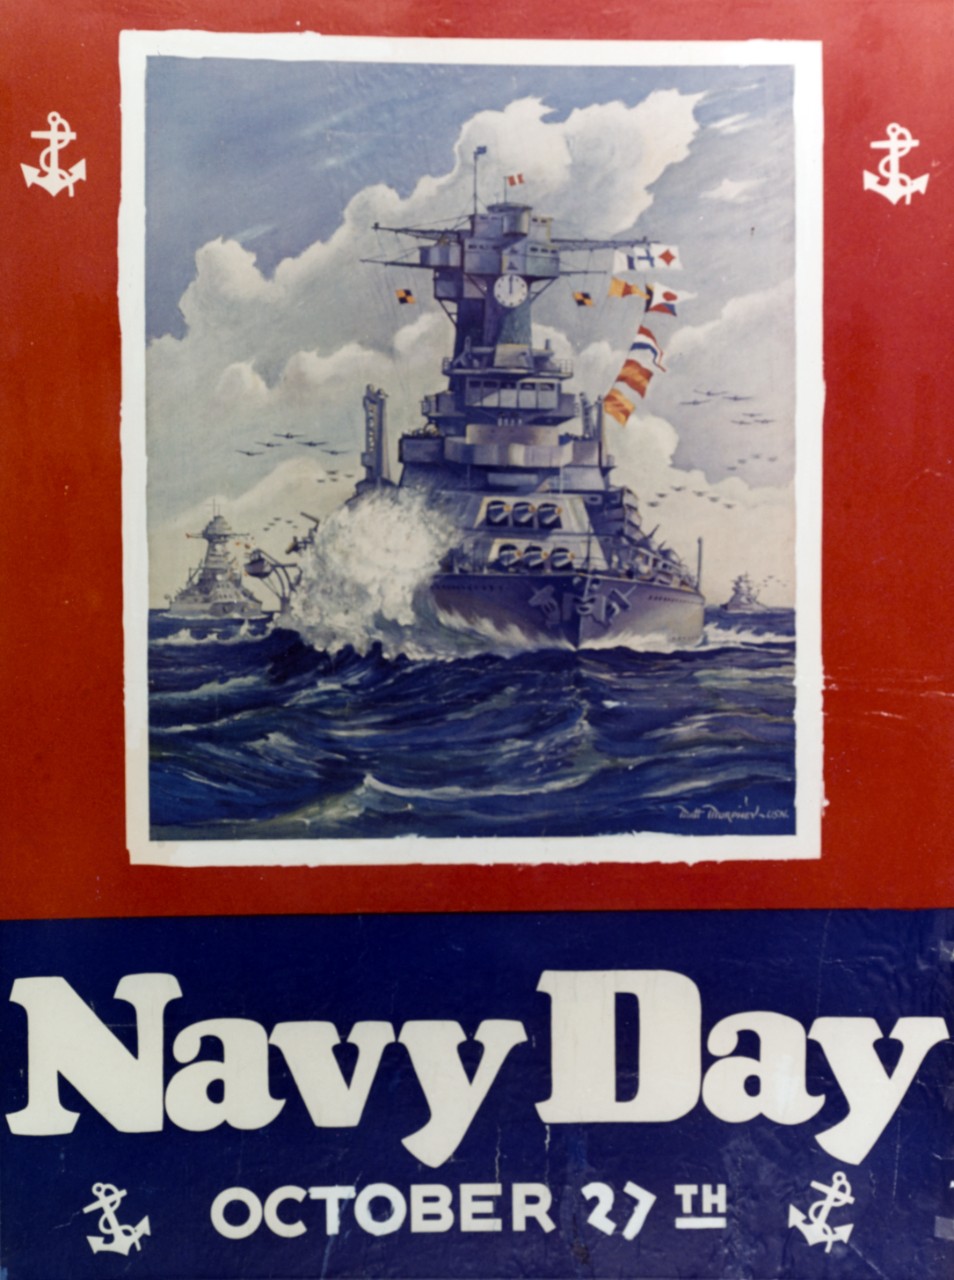 Navy Day Poster by artist Matt Murphey, issued 5 August 1940, original poster size 28" x 40".